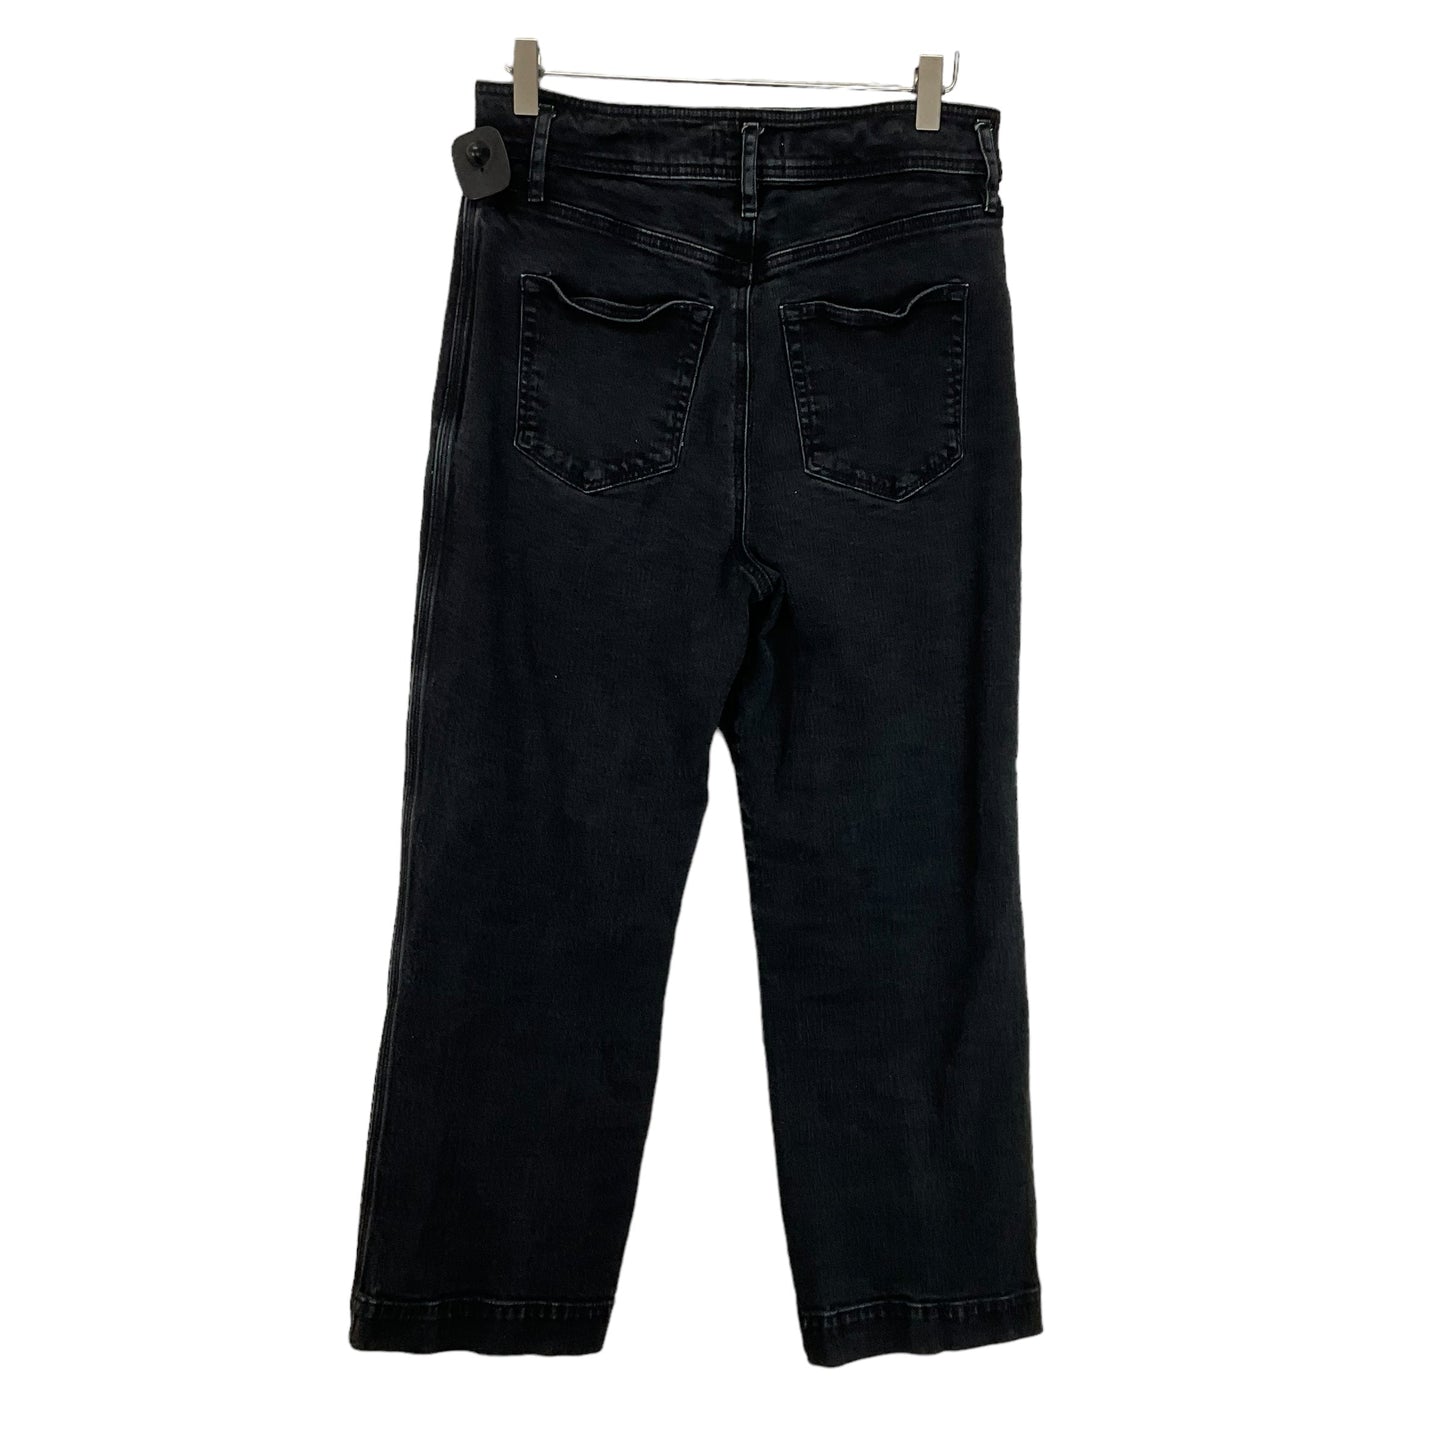 Black Jeans Skinny Loft, Size 8